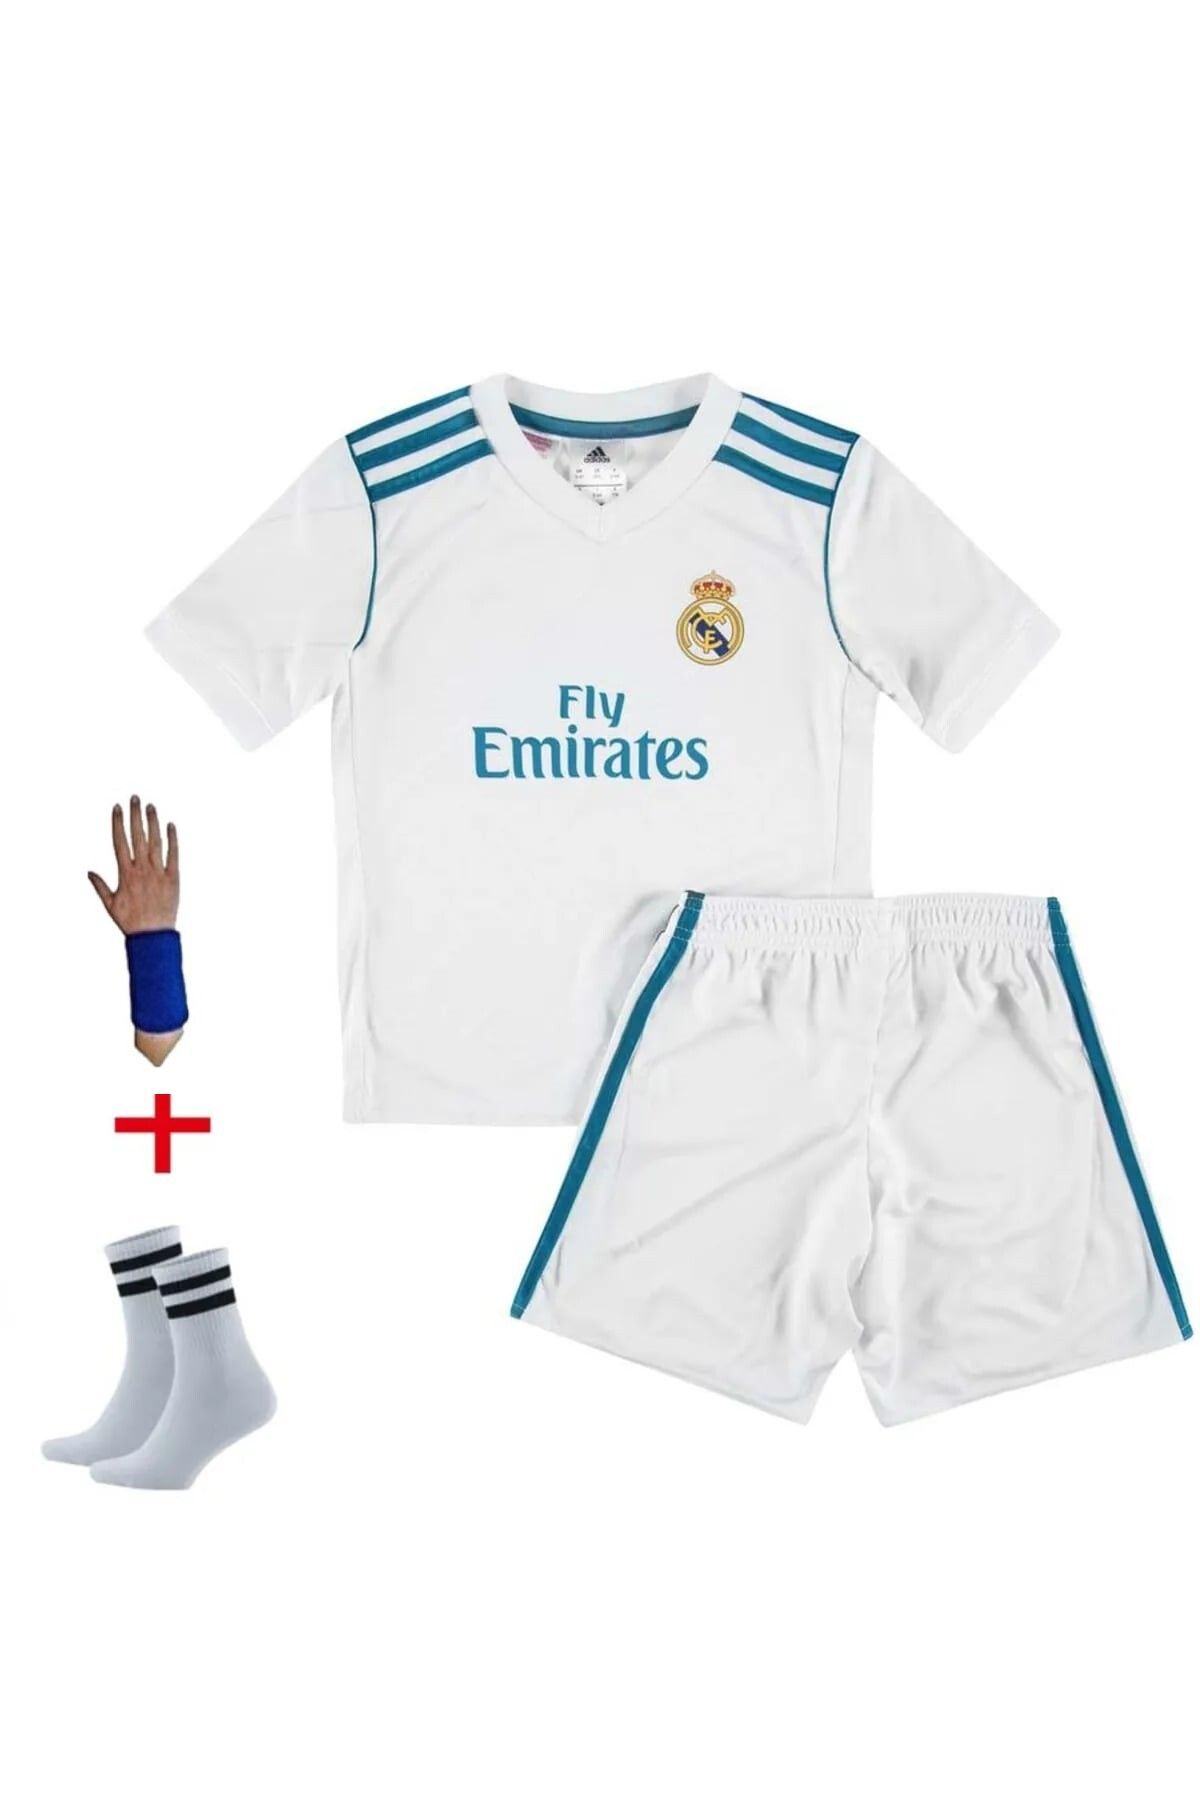 yenteks Ronaldo 2018 Real Madrid 4 Lü Set Beyaz Çocuk Futbol Forması Retro